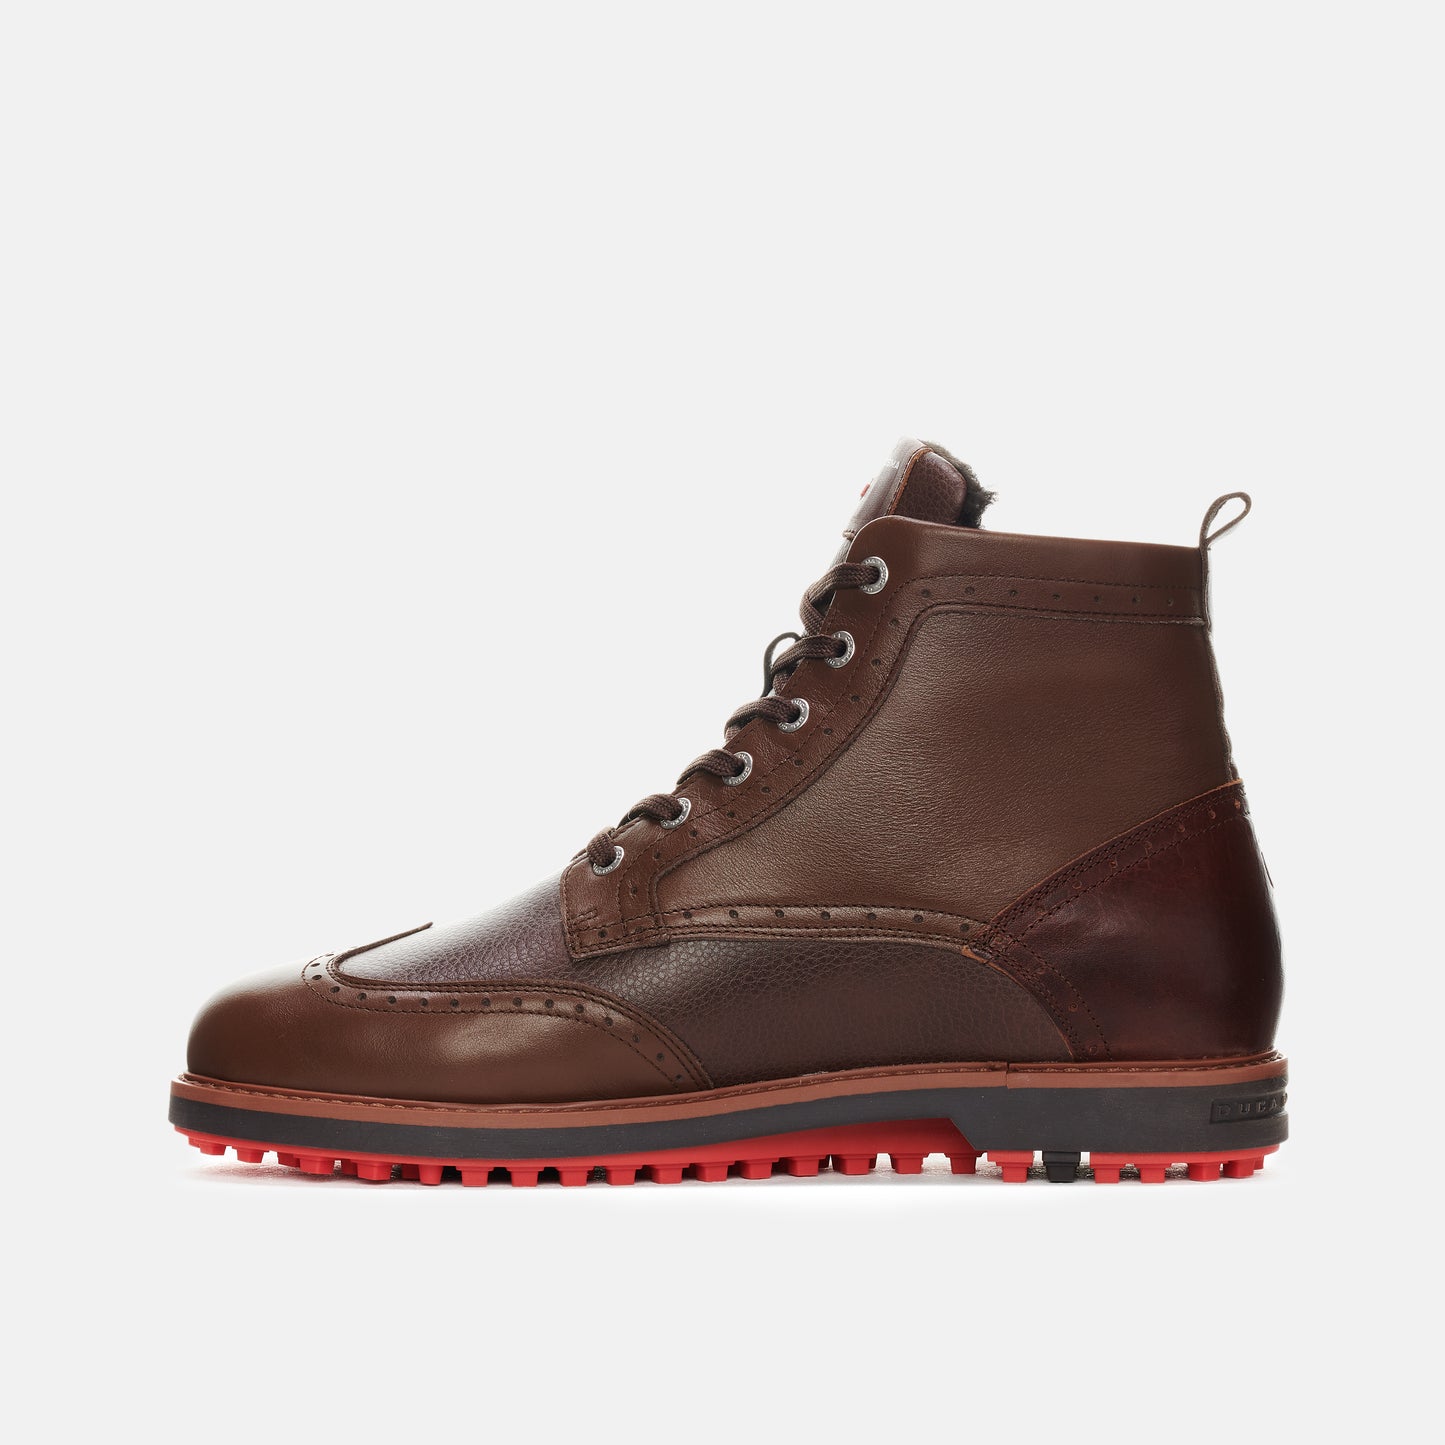 Duca del cosma Delago brown men's golf shoes are the best waterproof winter golf boots for men's